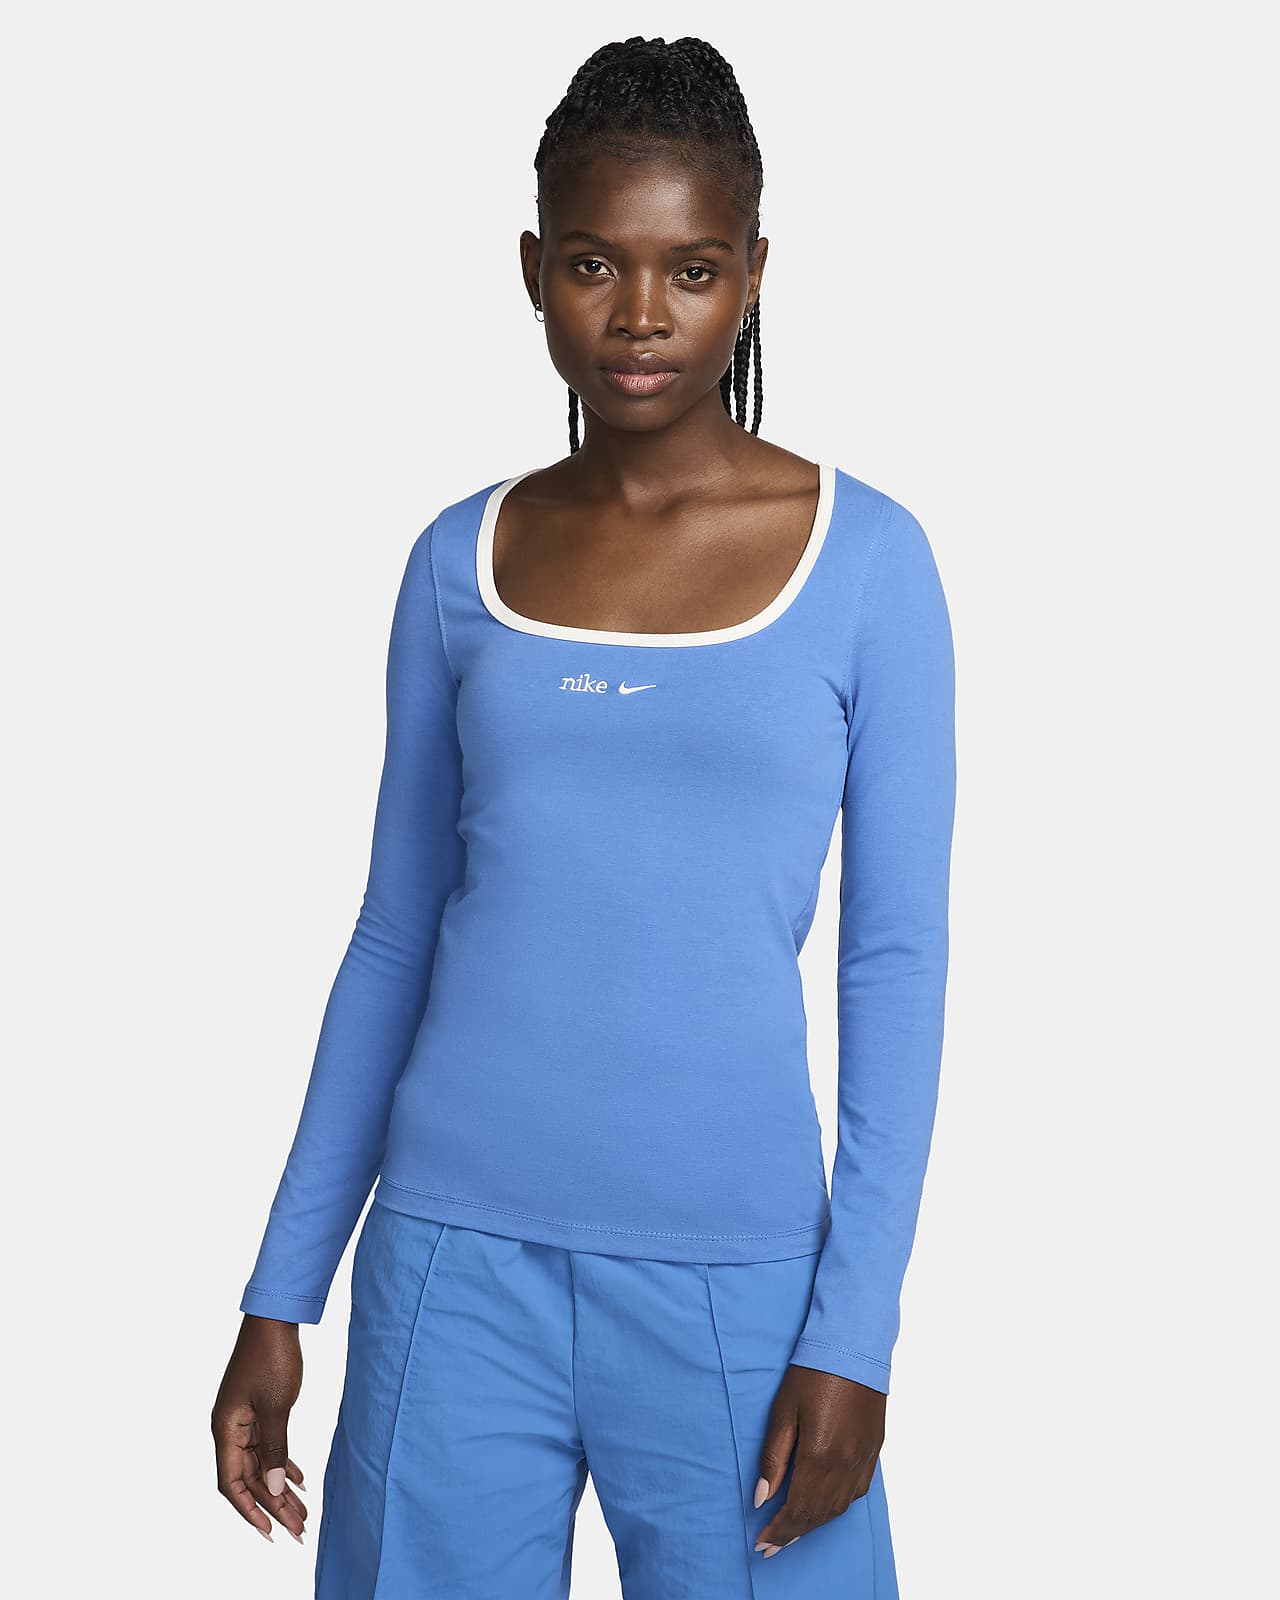 Nike Sportswear Women's Square-Neck Long-Sleeve Top. Nike NO